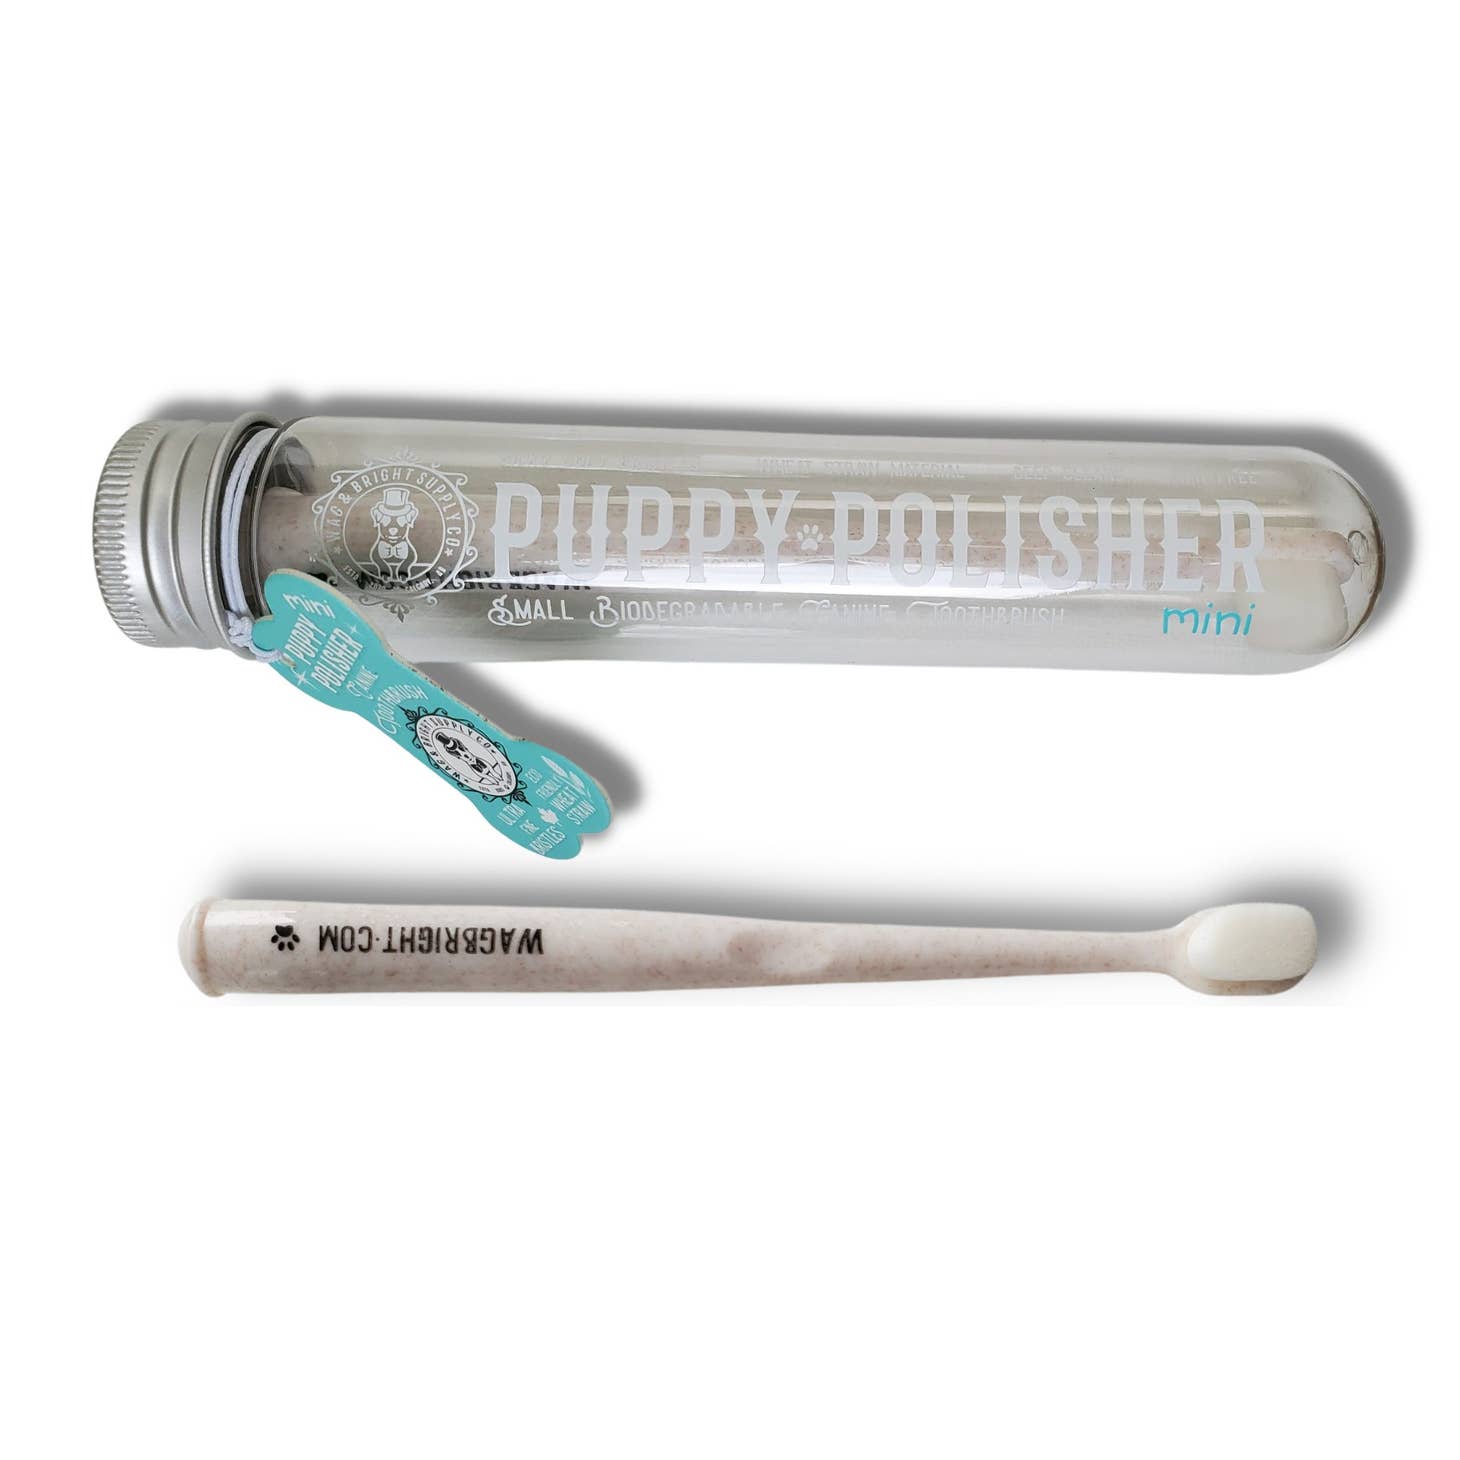 Puppy Polisher Mini Toothbrush